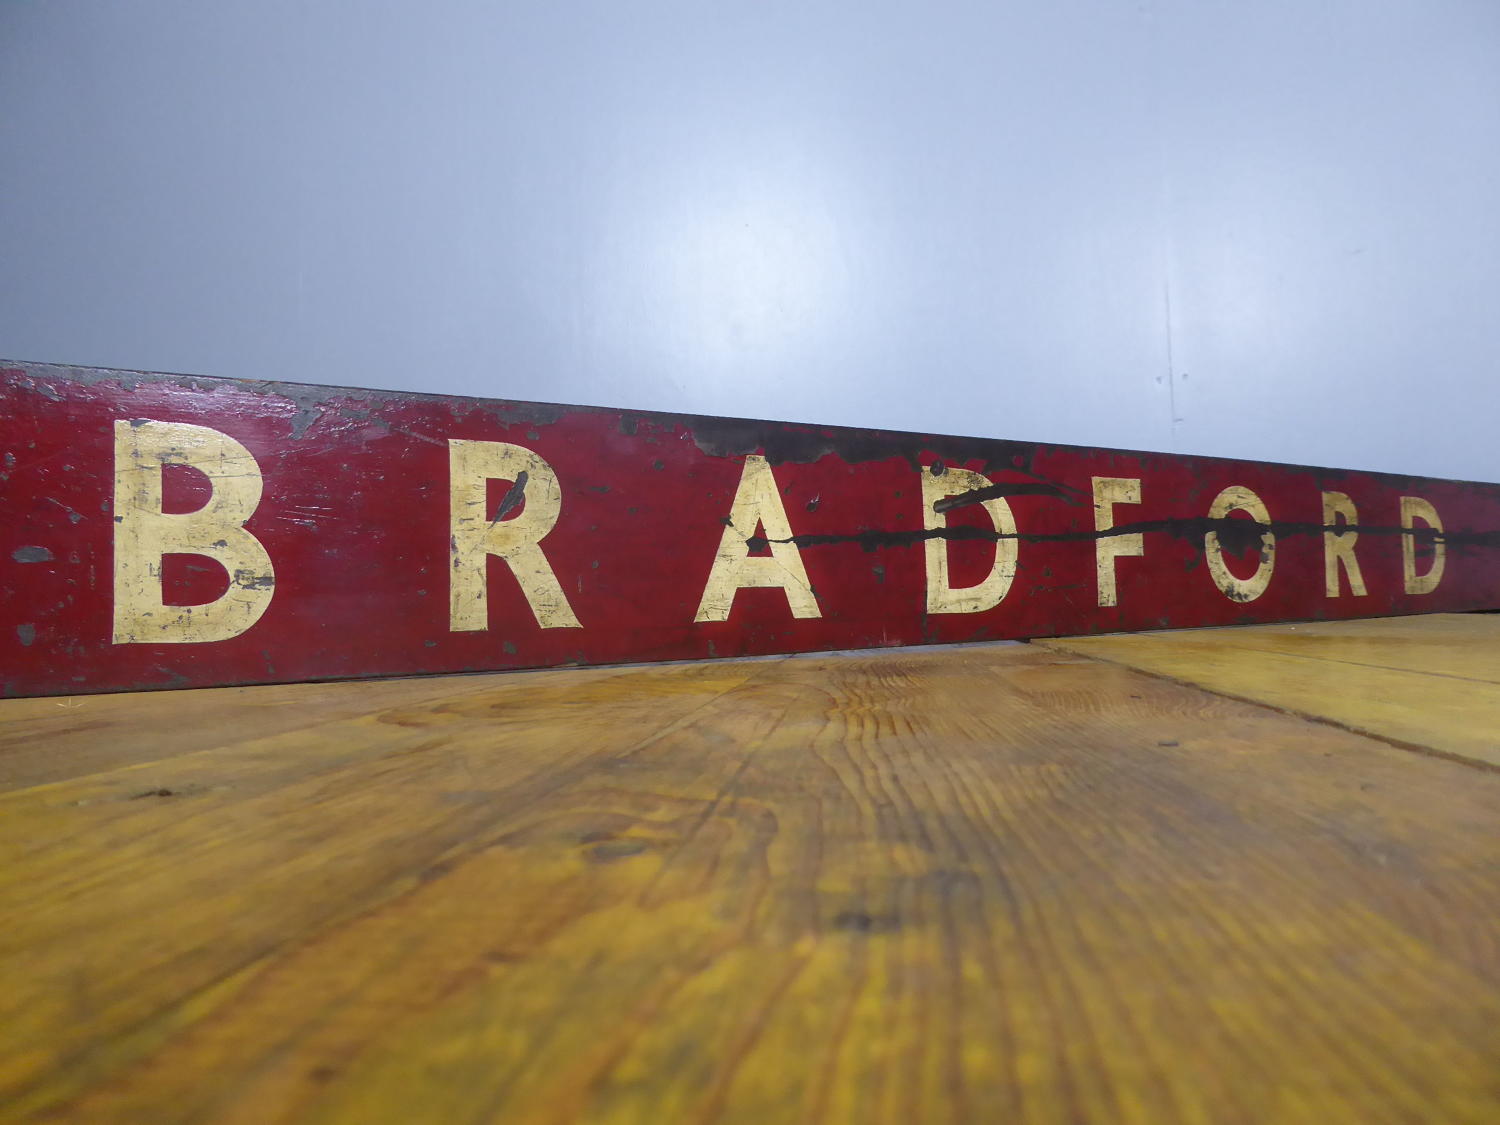 'Bradford'